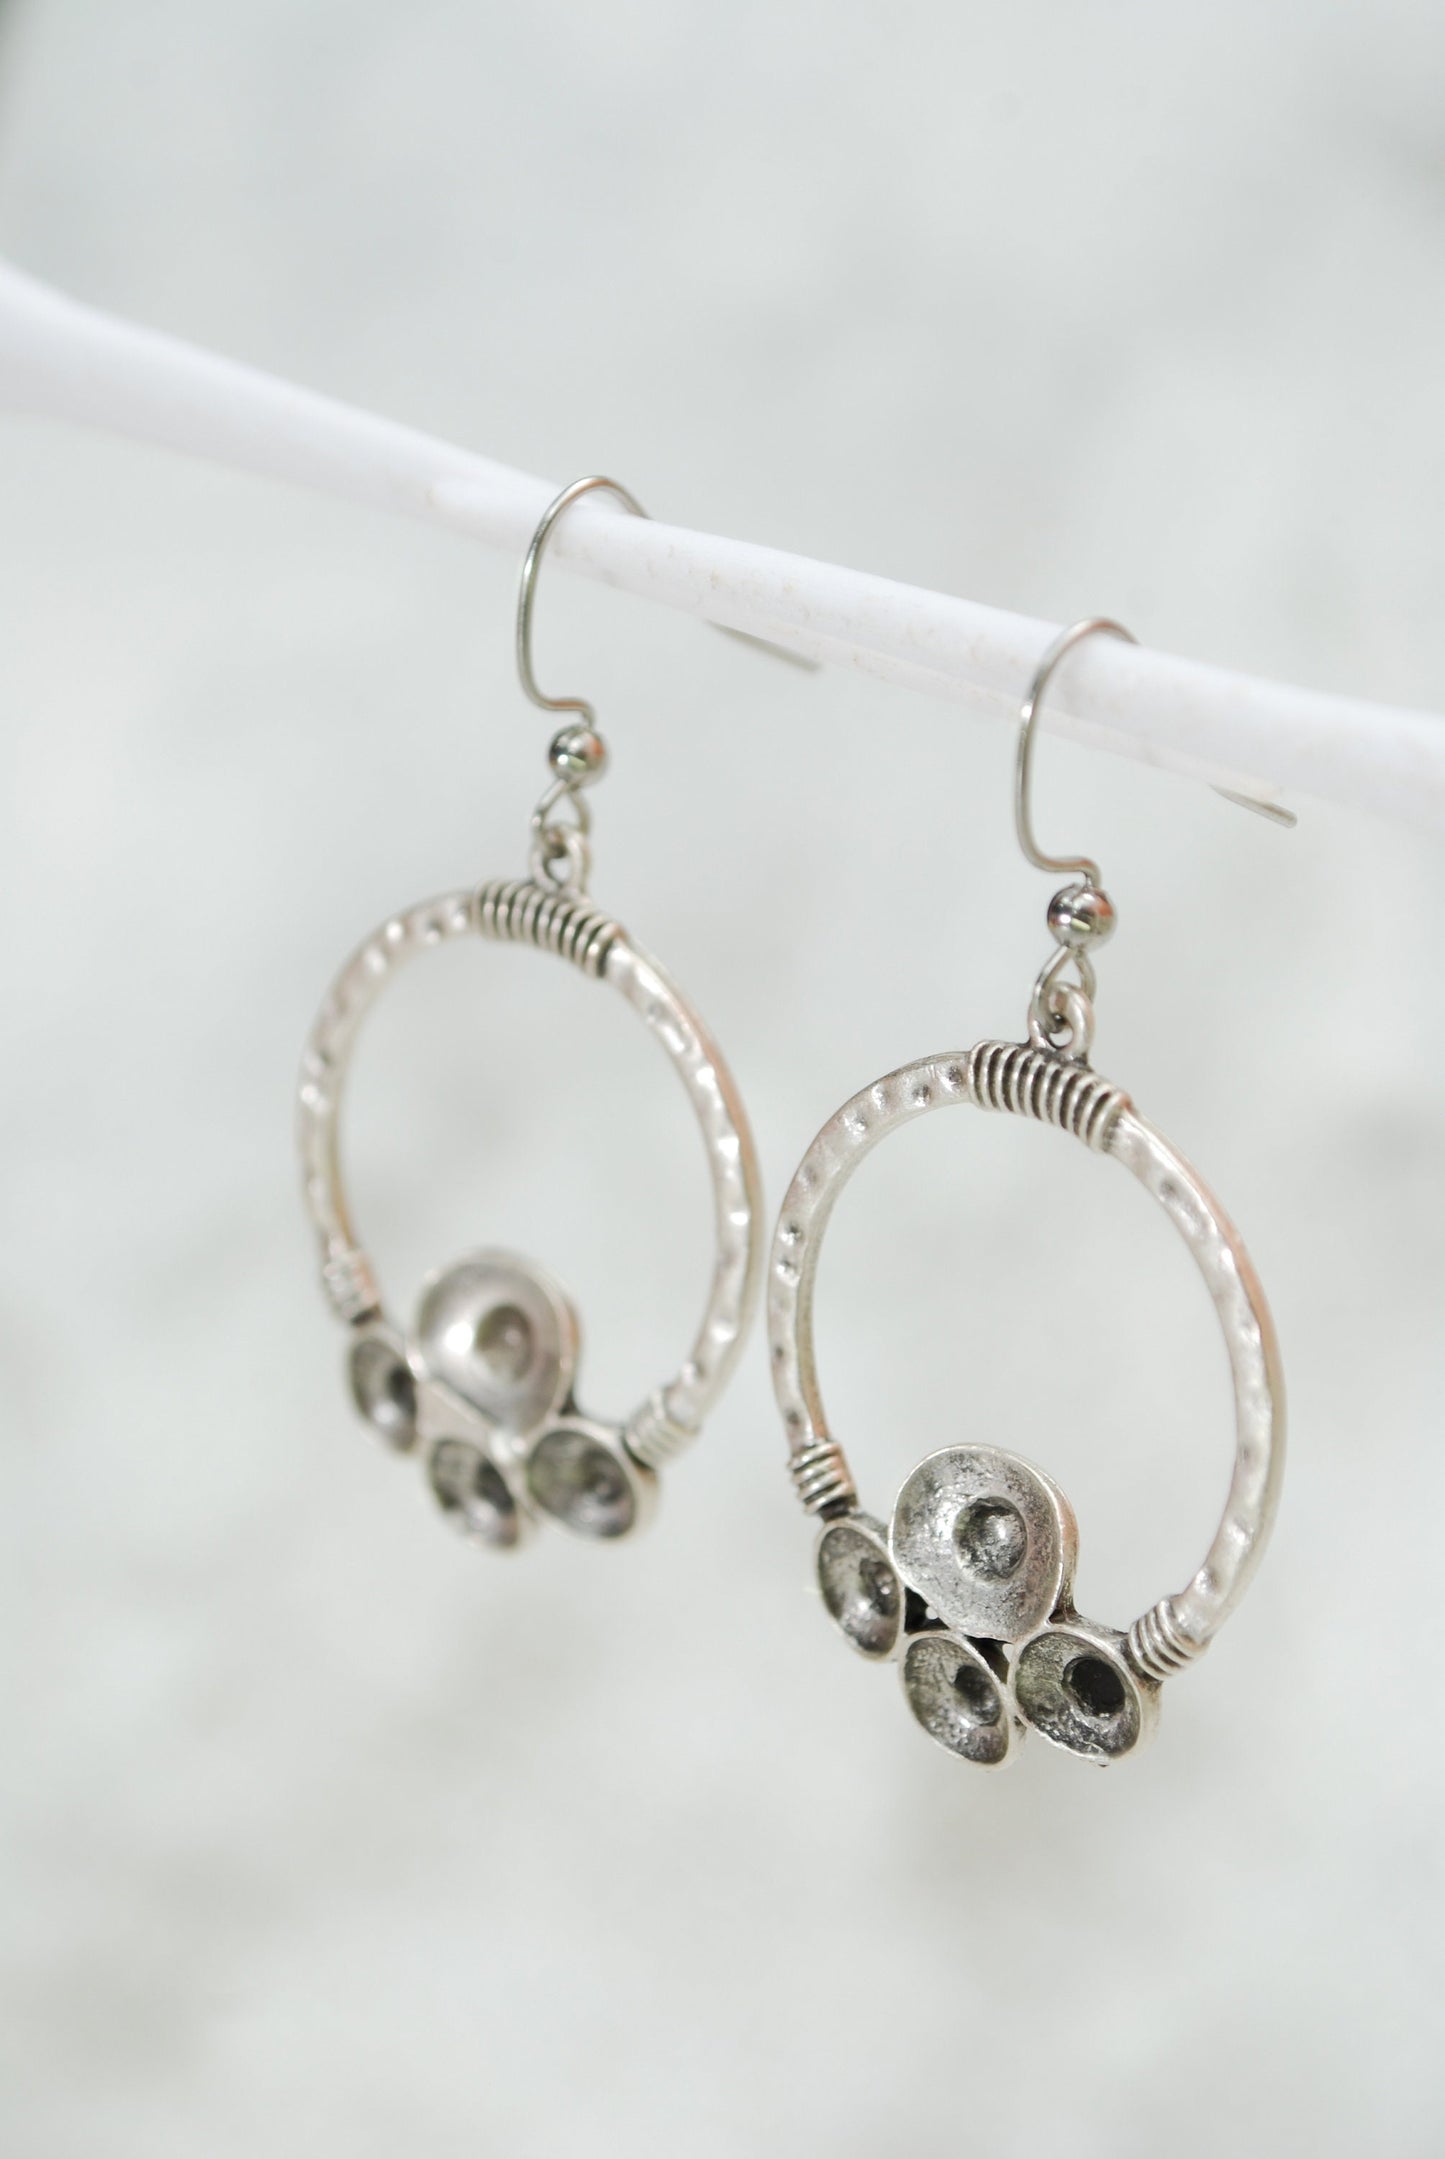 Round antigue silver earrings / Unique design earrings / Large big earrings / Estibela 5cm - 2 inches